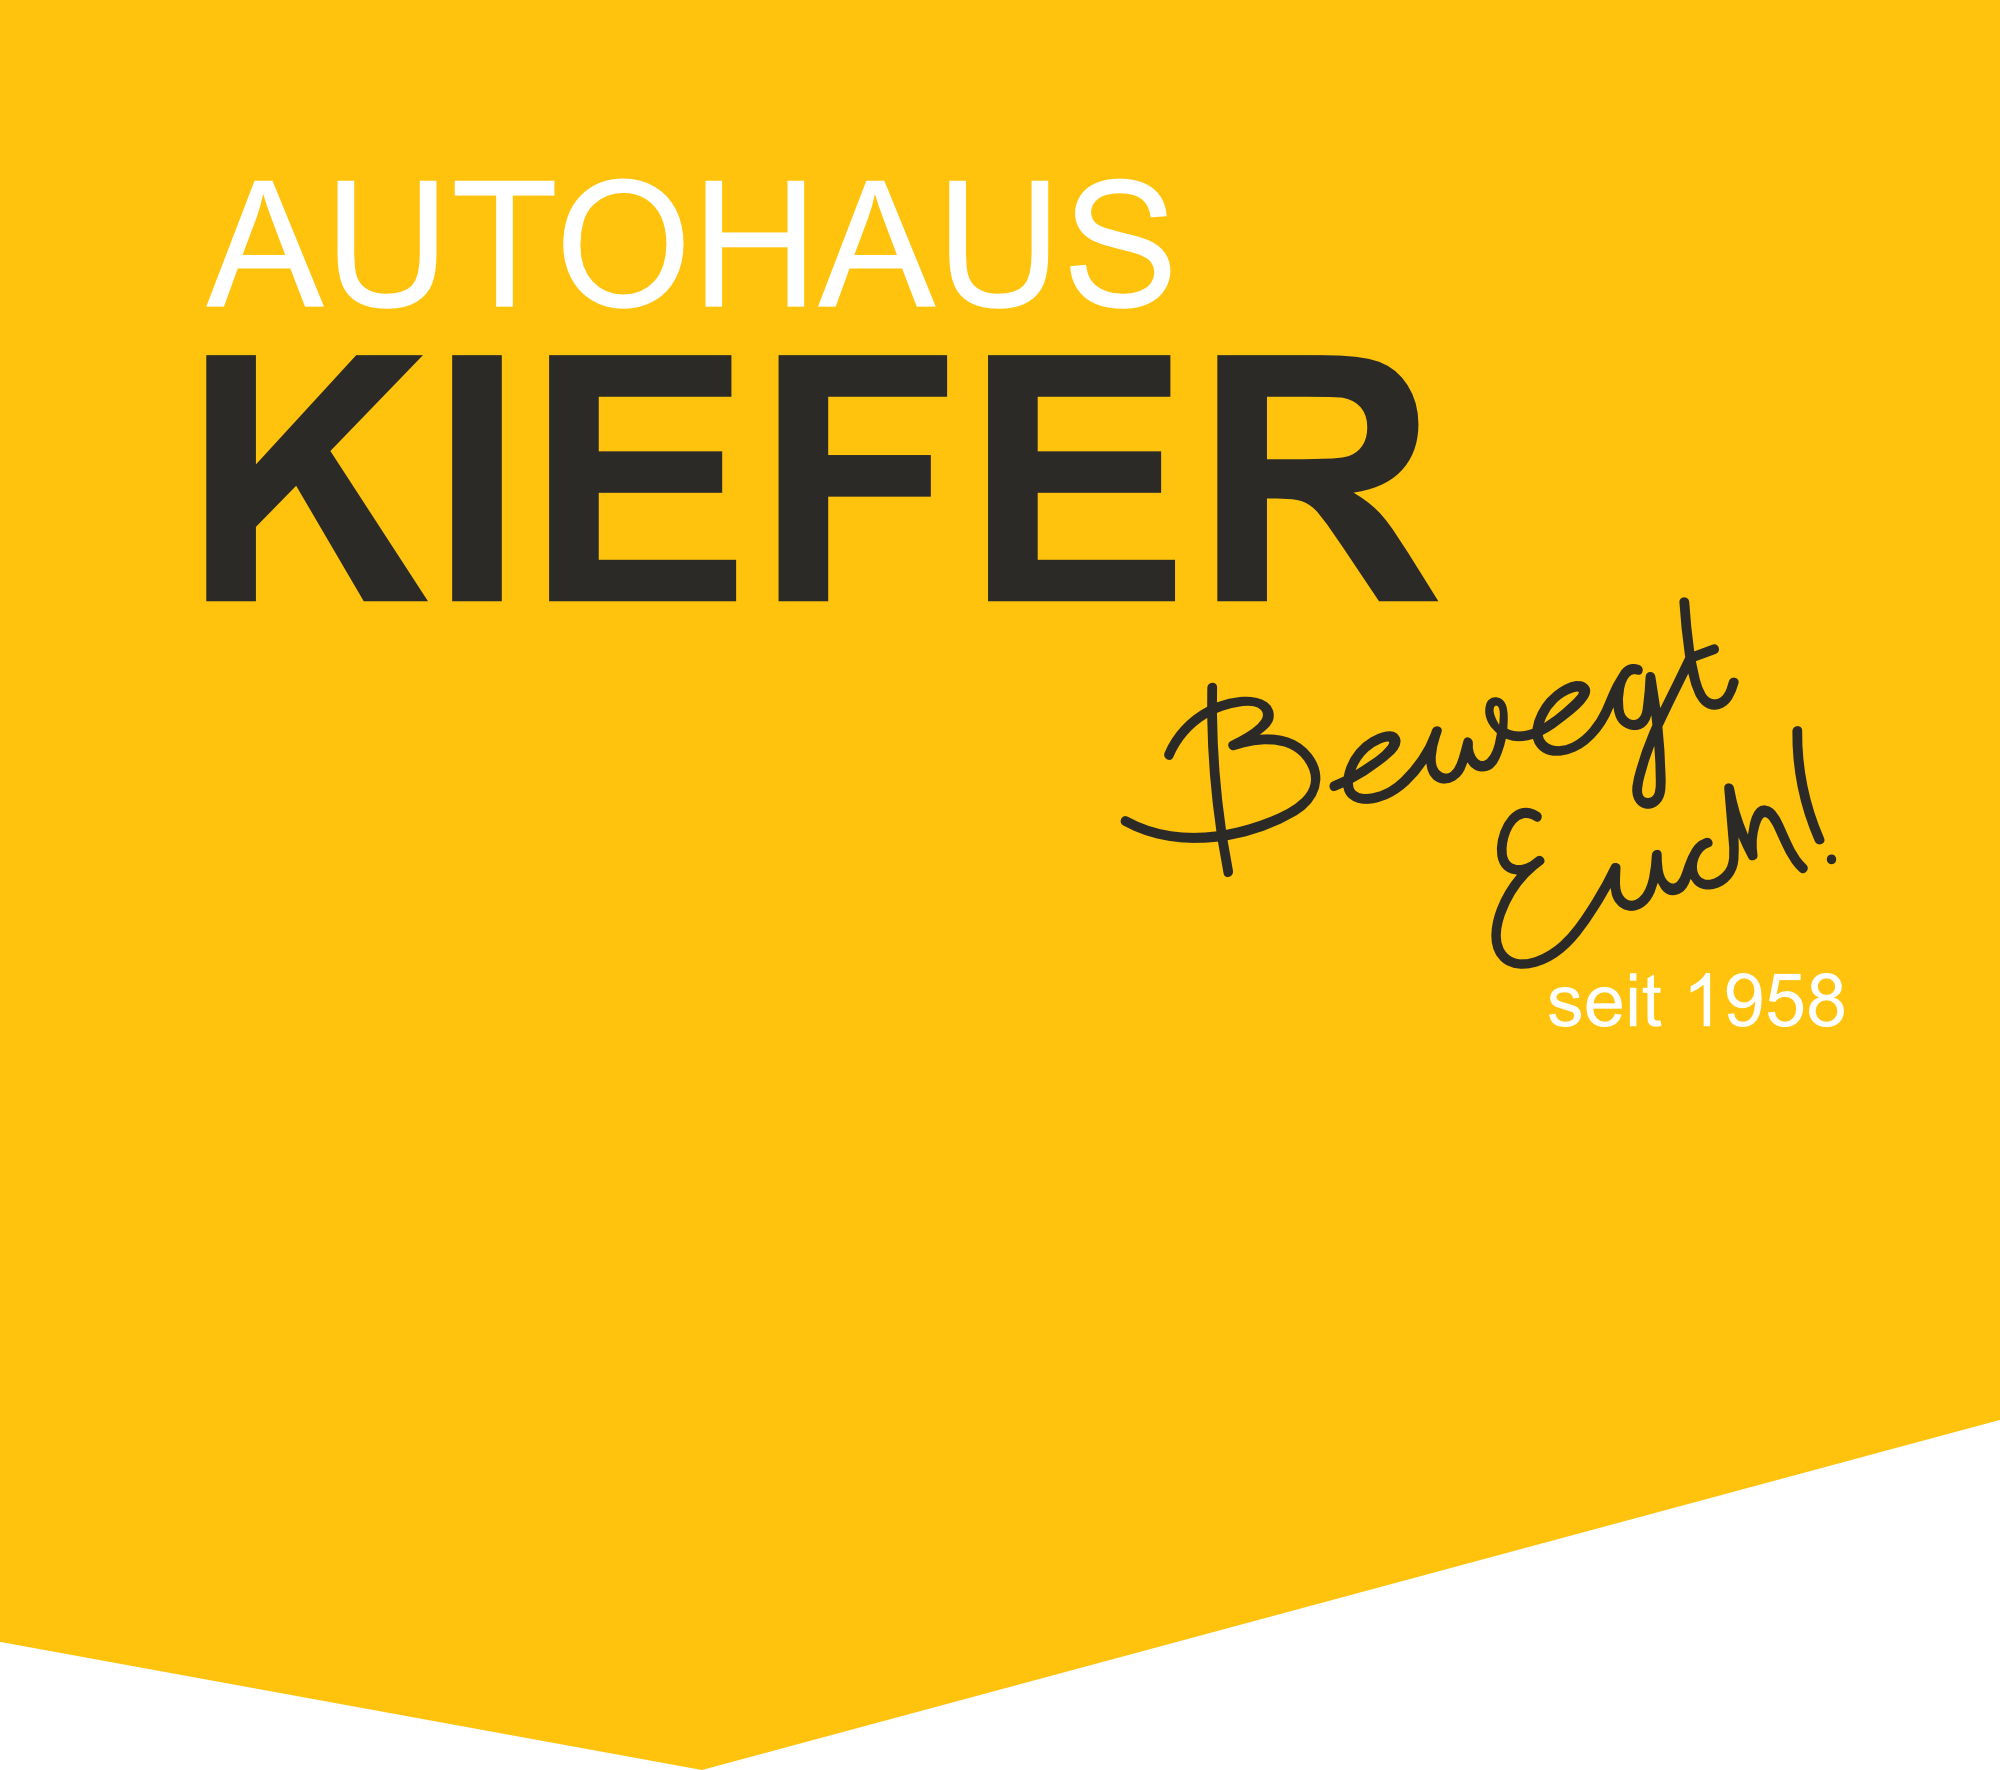 Autohaus Kiefer GmbH